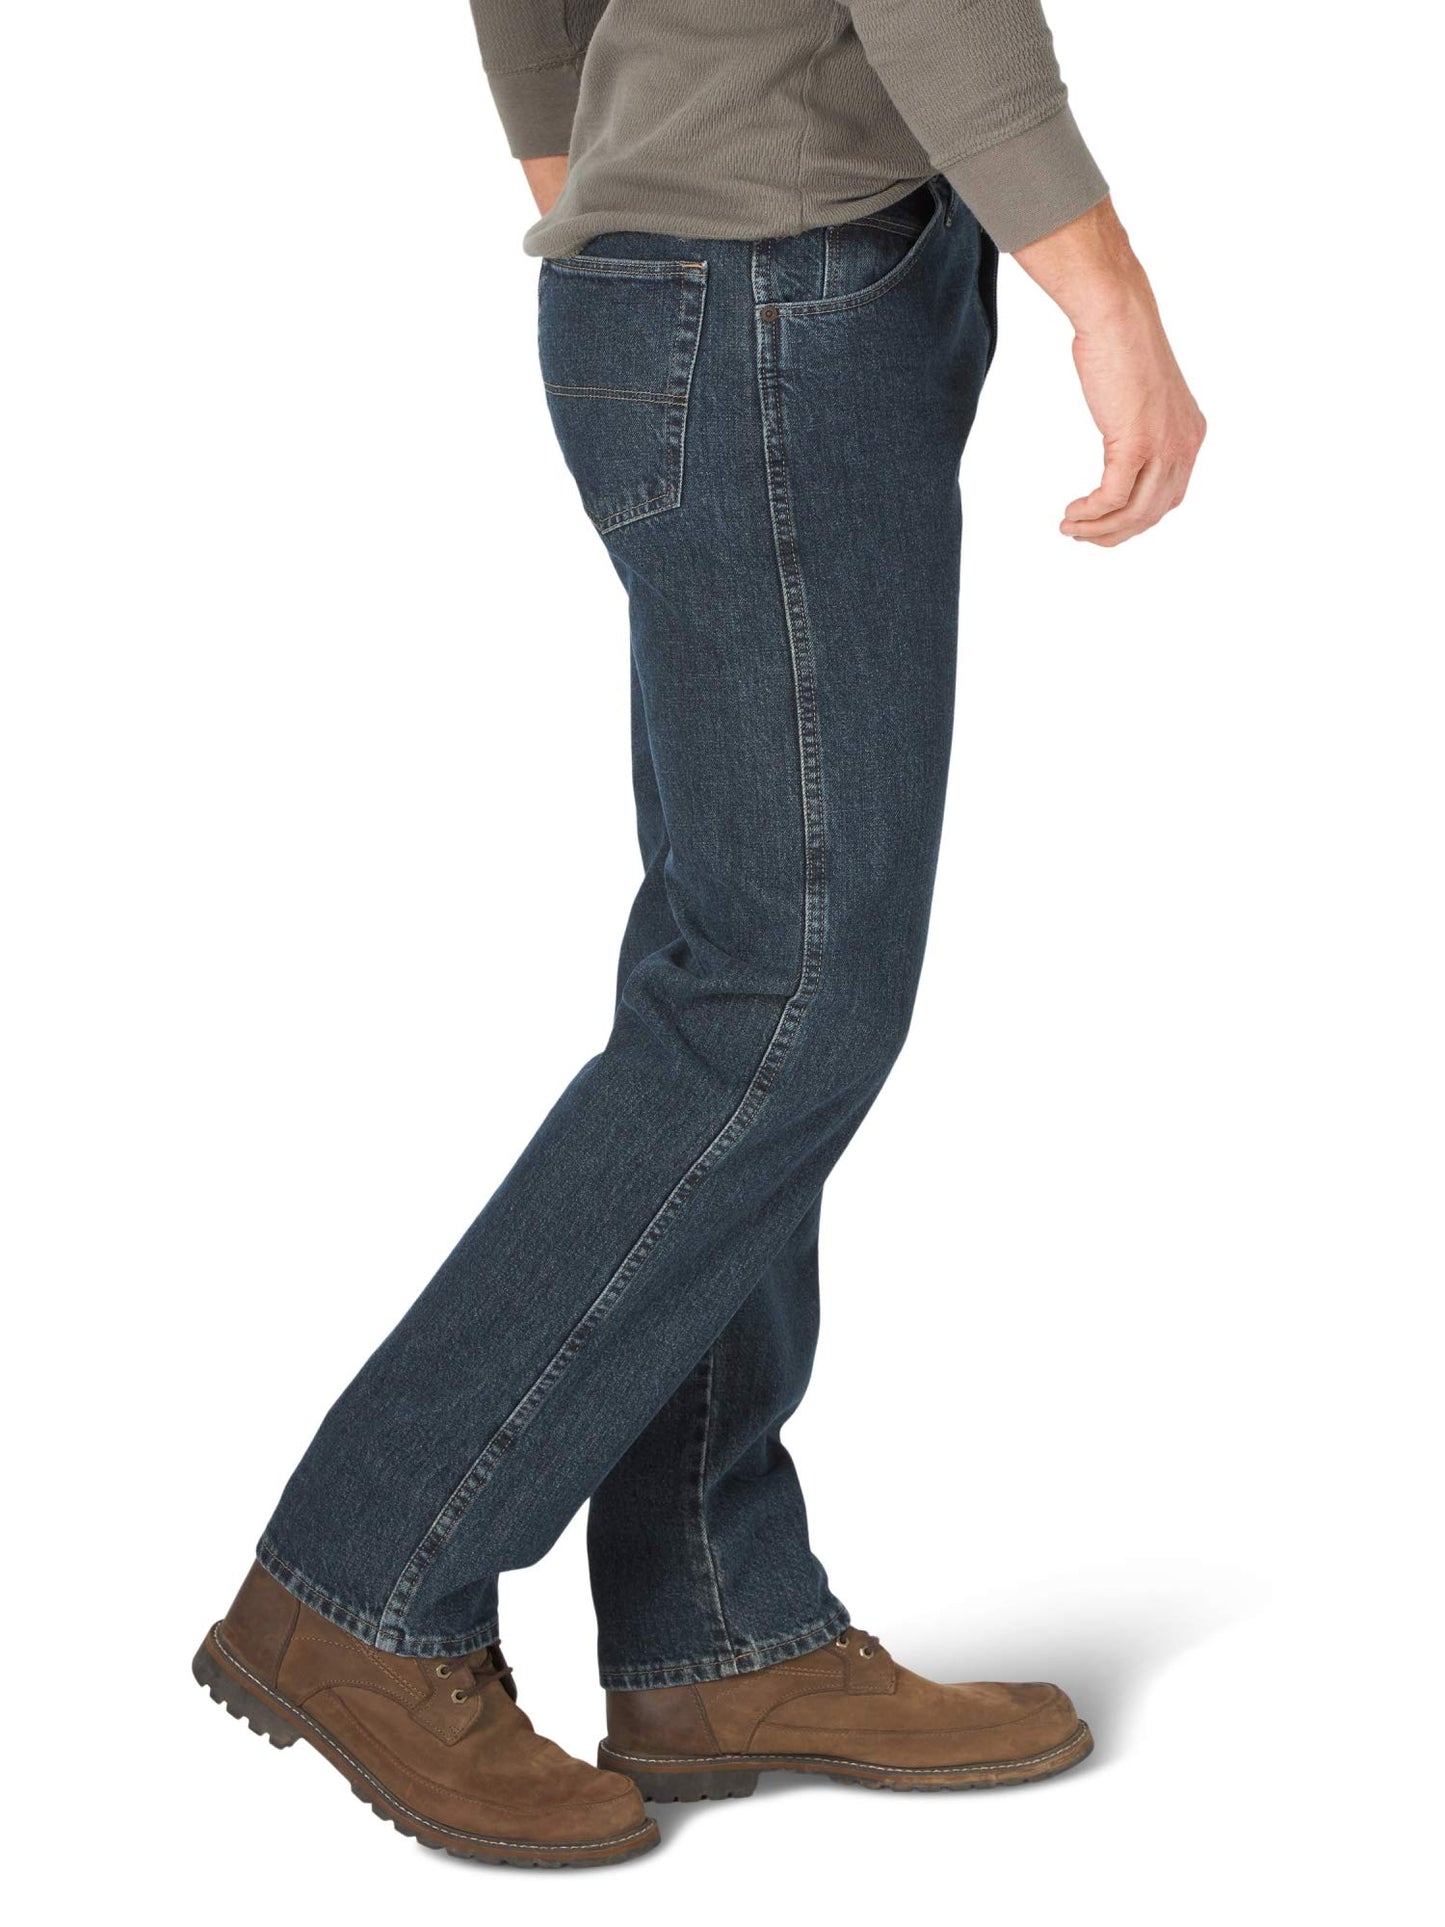 Wrangler Authentics Men's Classic 5-Pocket Regular Fit Cotton Jean, Storm, 30W x 30L